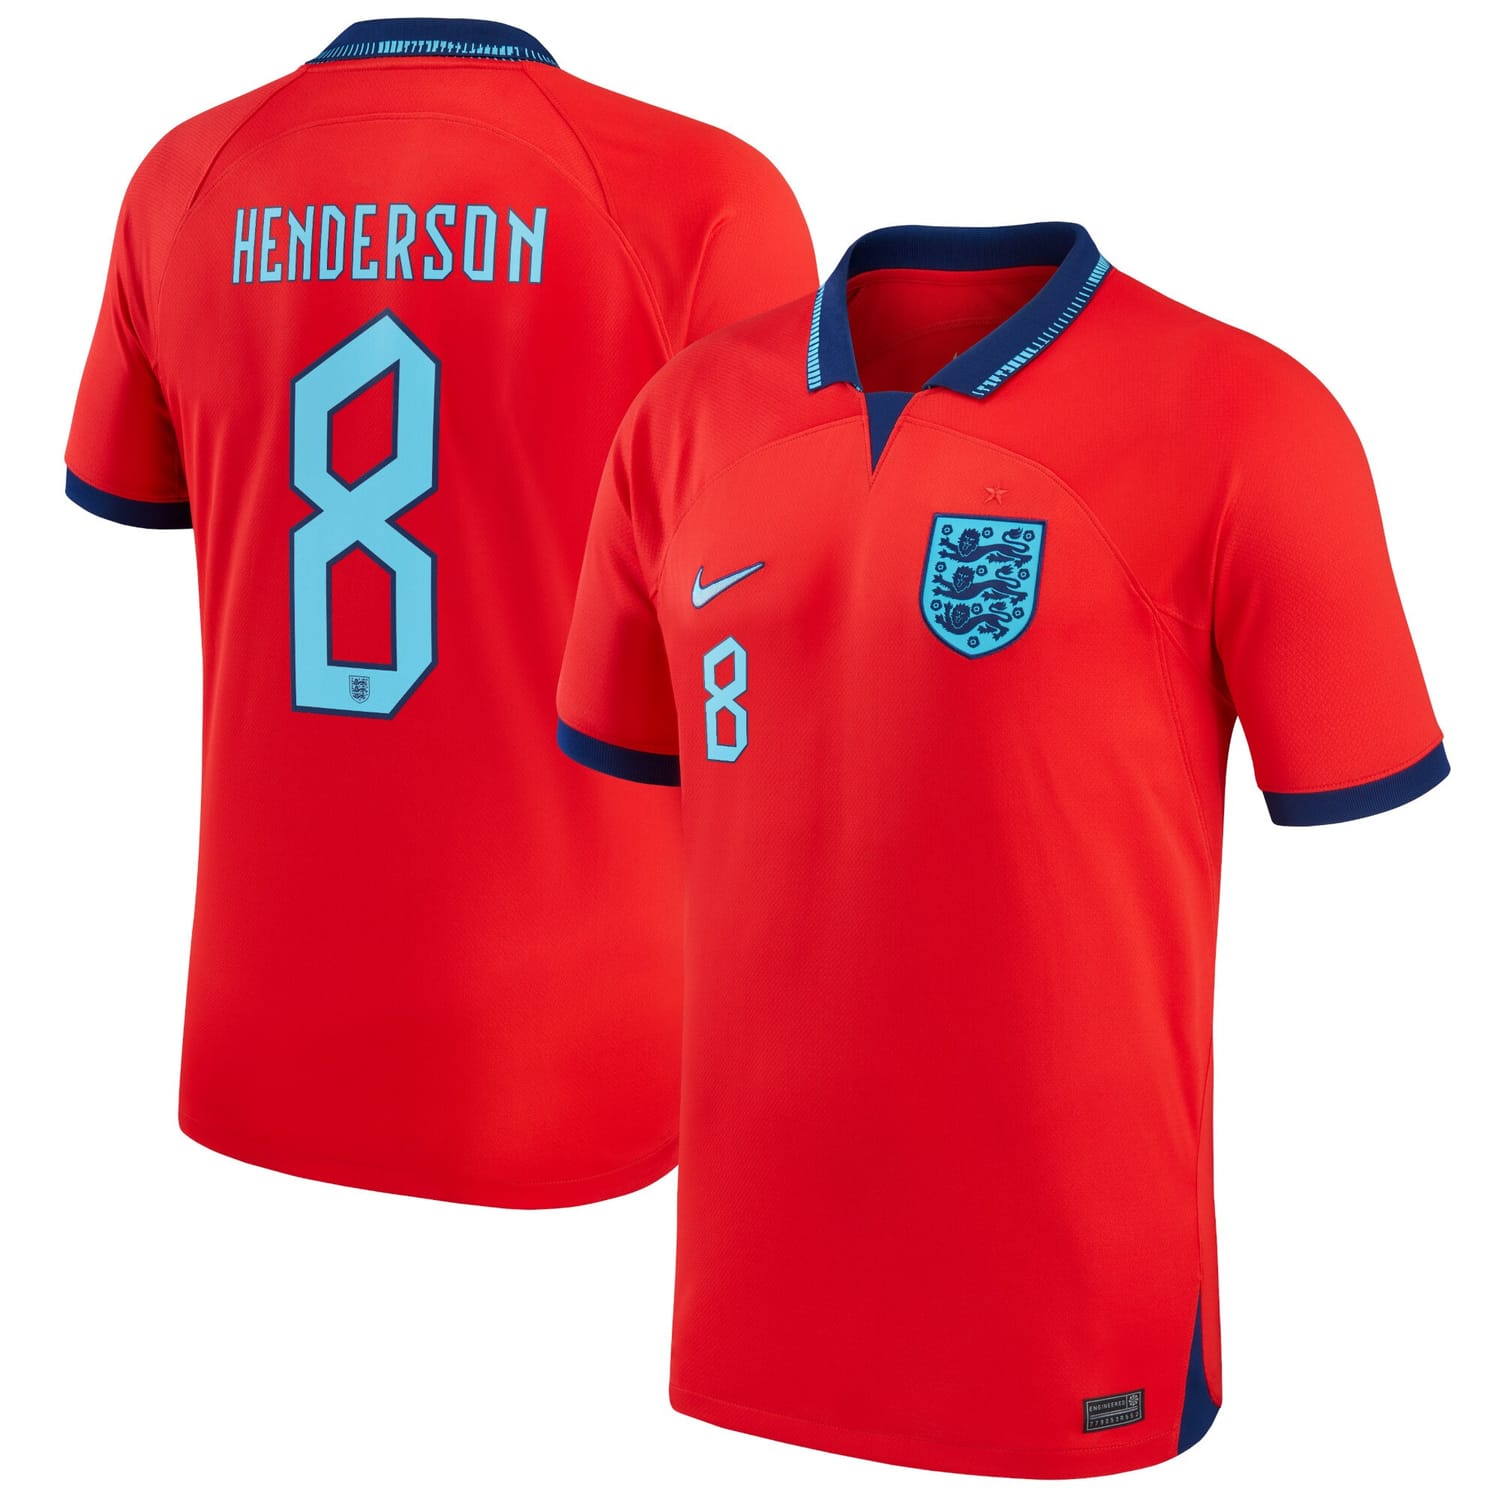 England National Team Away Jersey Shirt 2022 player Jordan Henderson 8 printing for Men